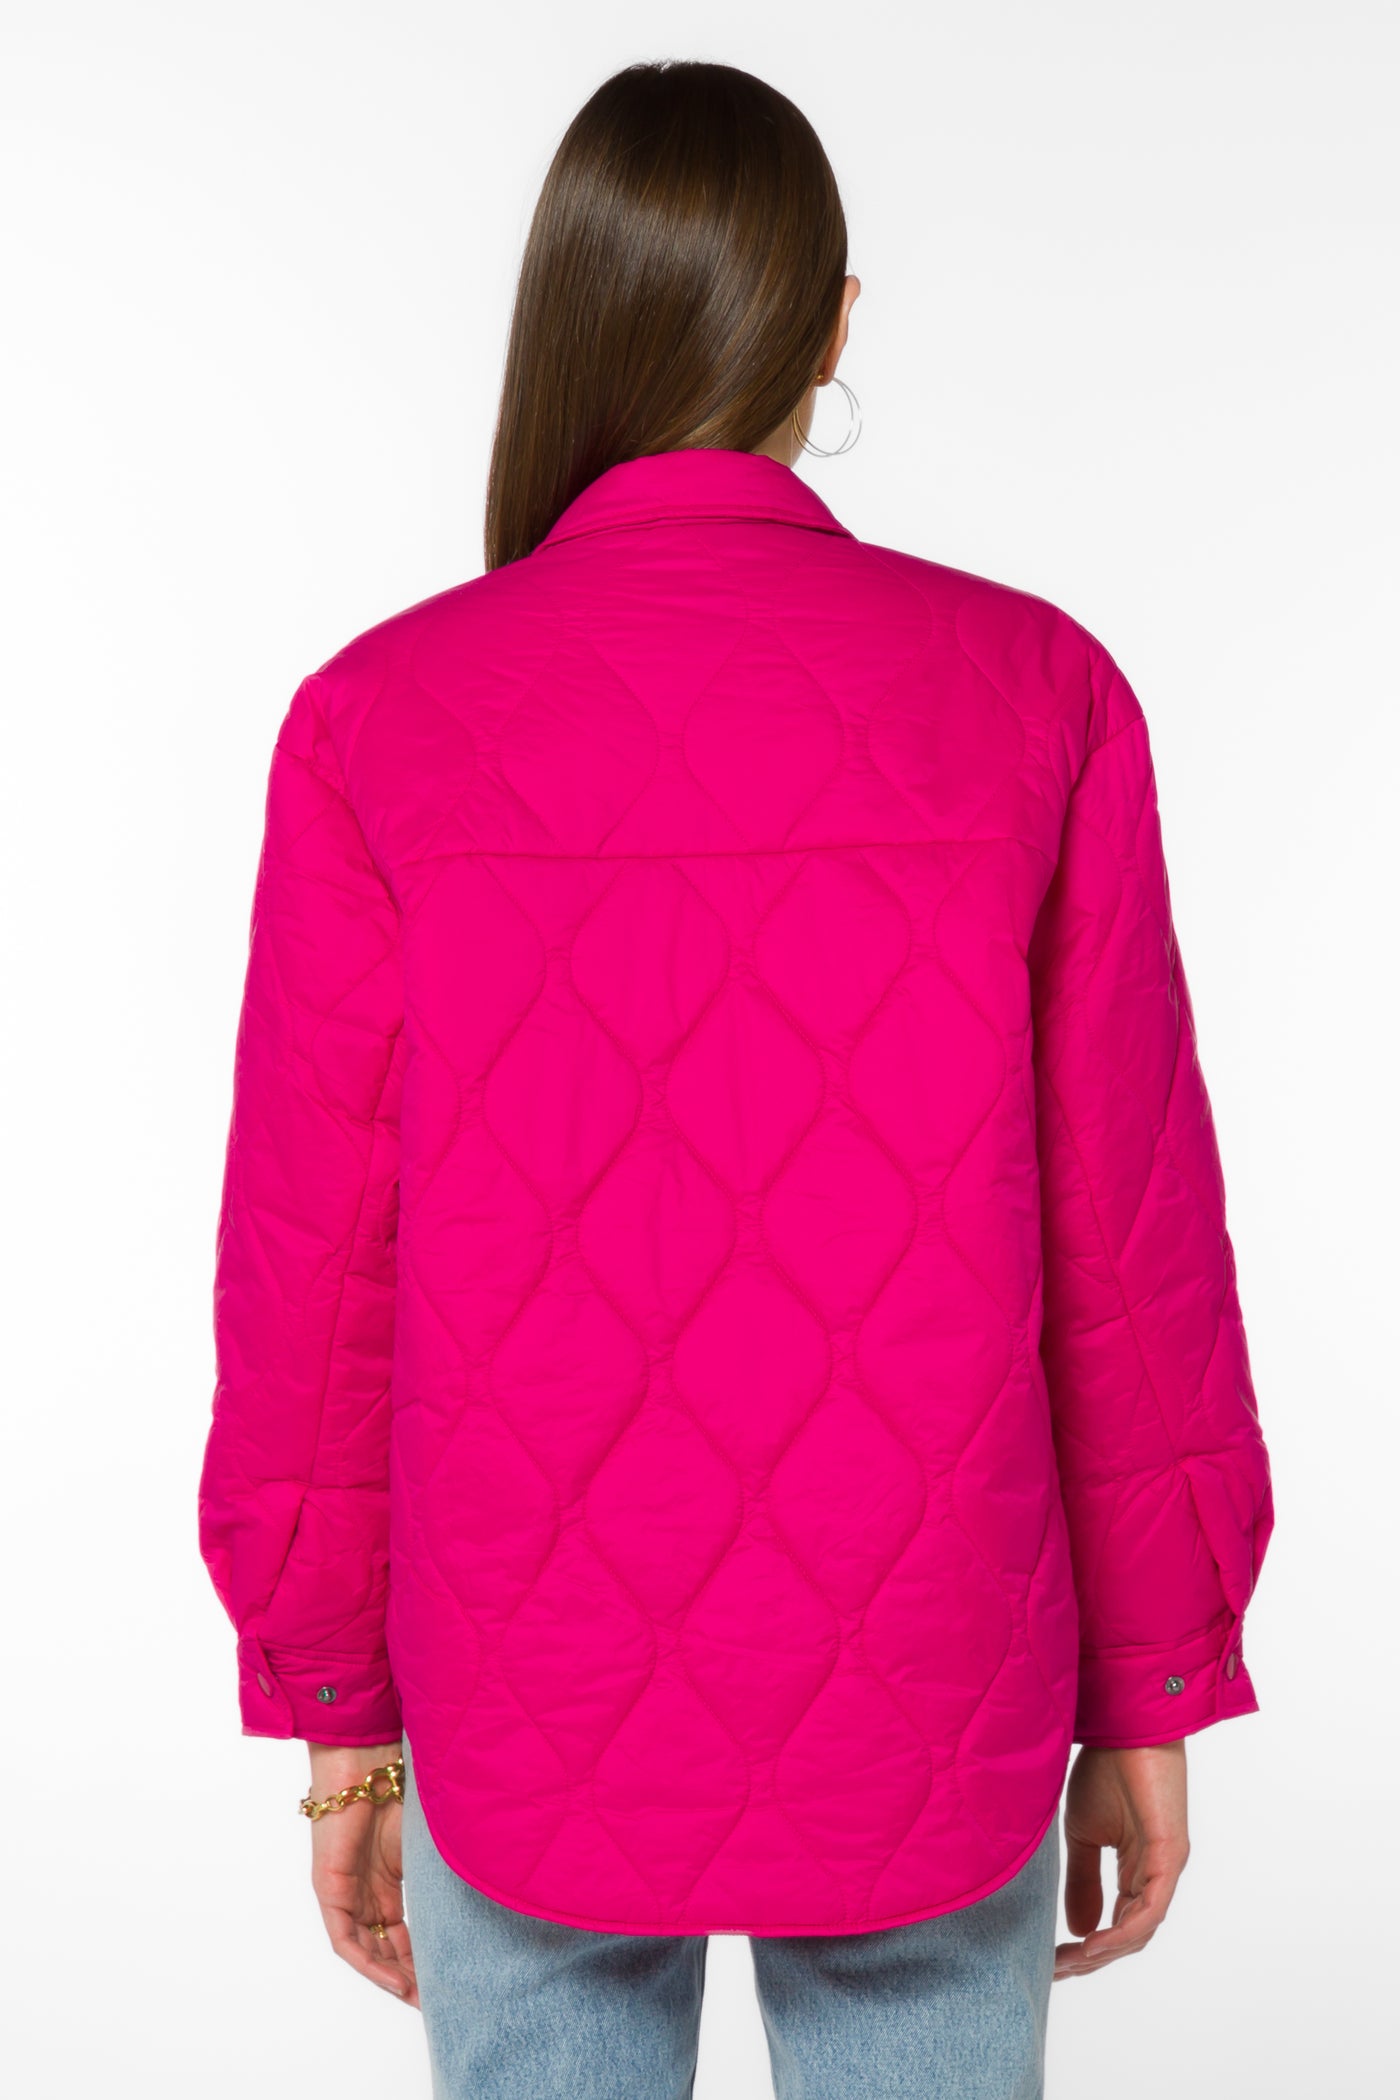 Eleanor Fuchsia Jacket - Jackets & Outerwear - Velvet Heart Clothing